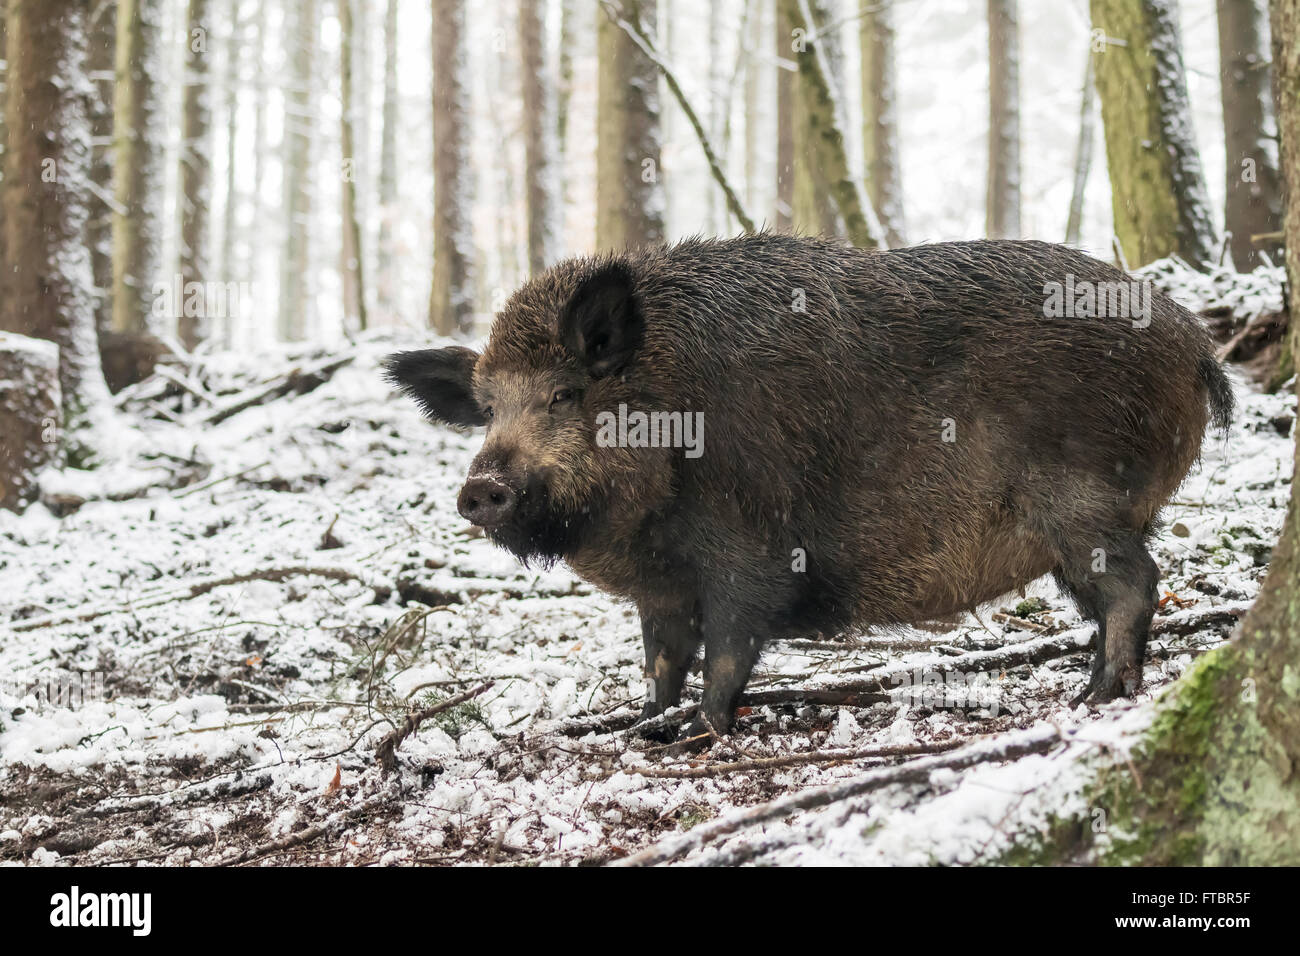 Wild boar (Sus scrofa), Sow in winter with snow, Vulkaneifel, Rhineland-Palatinate, Germany Stock Photo